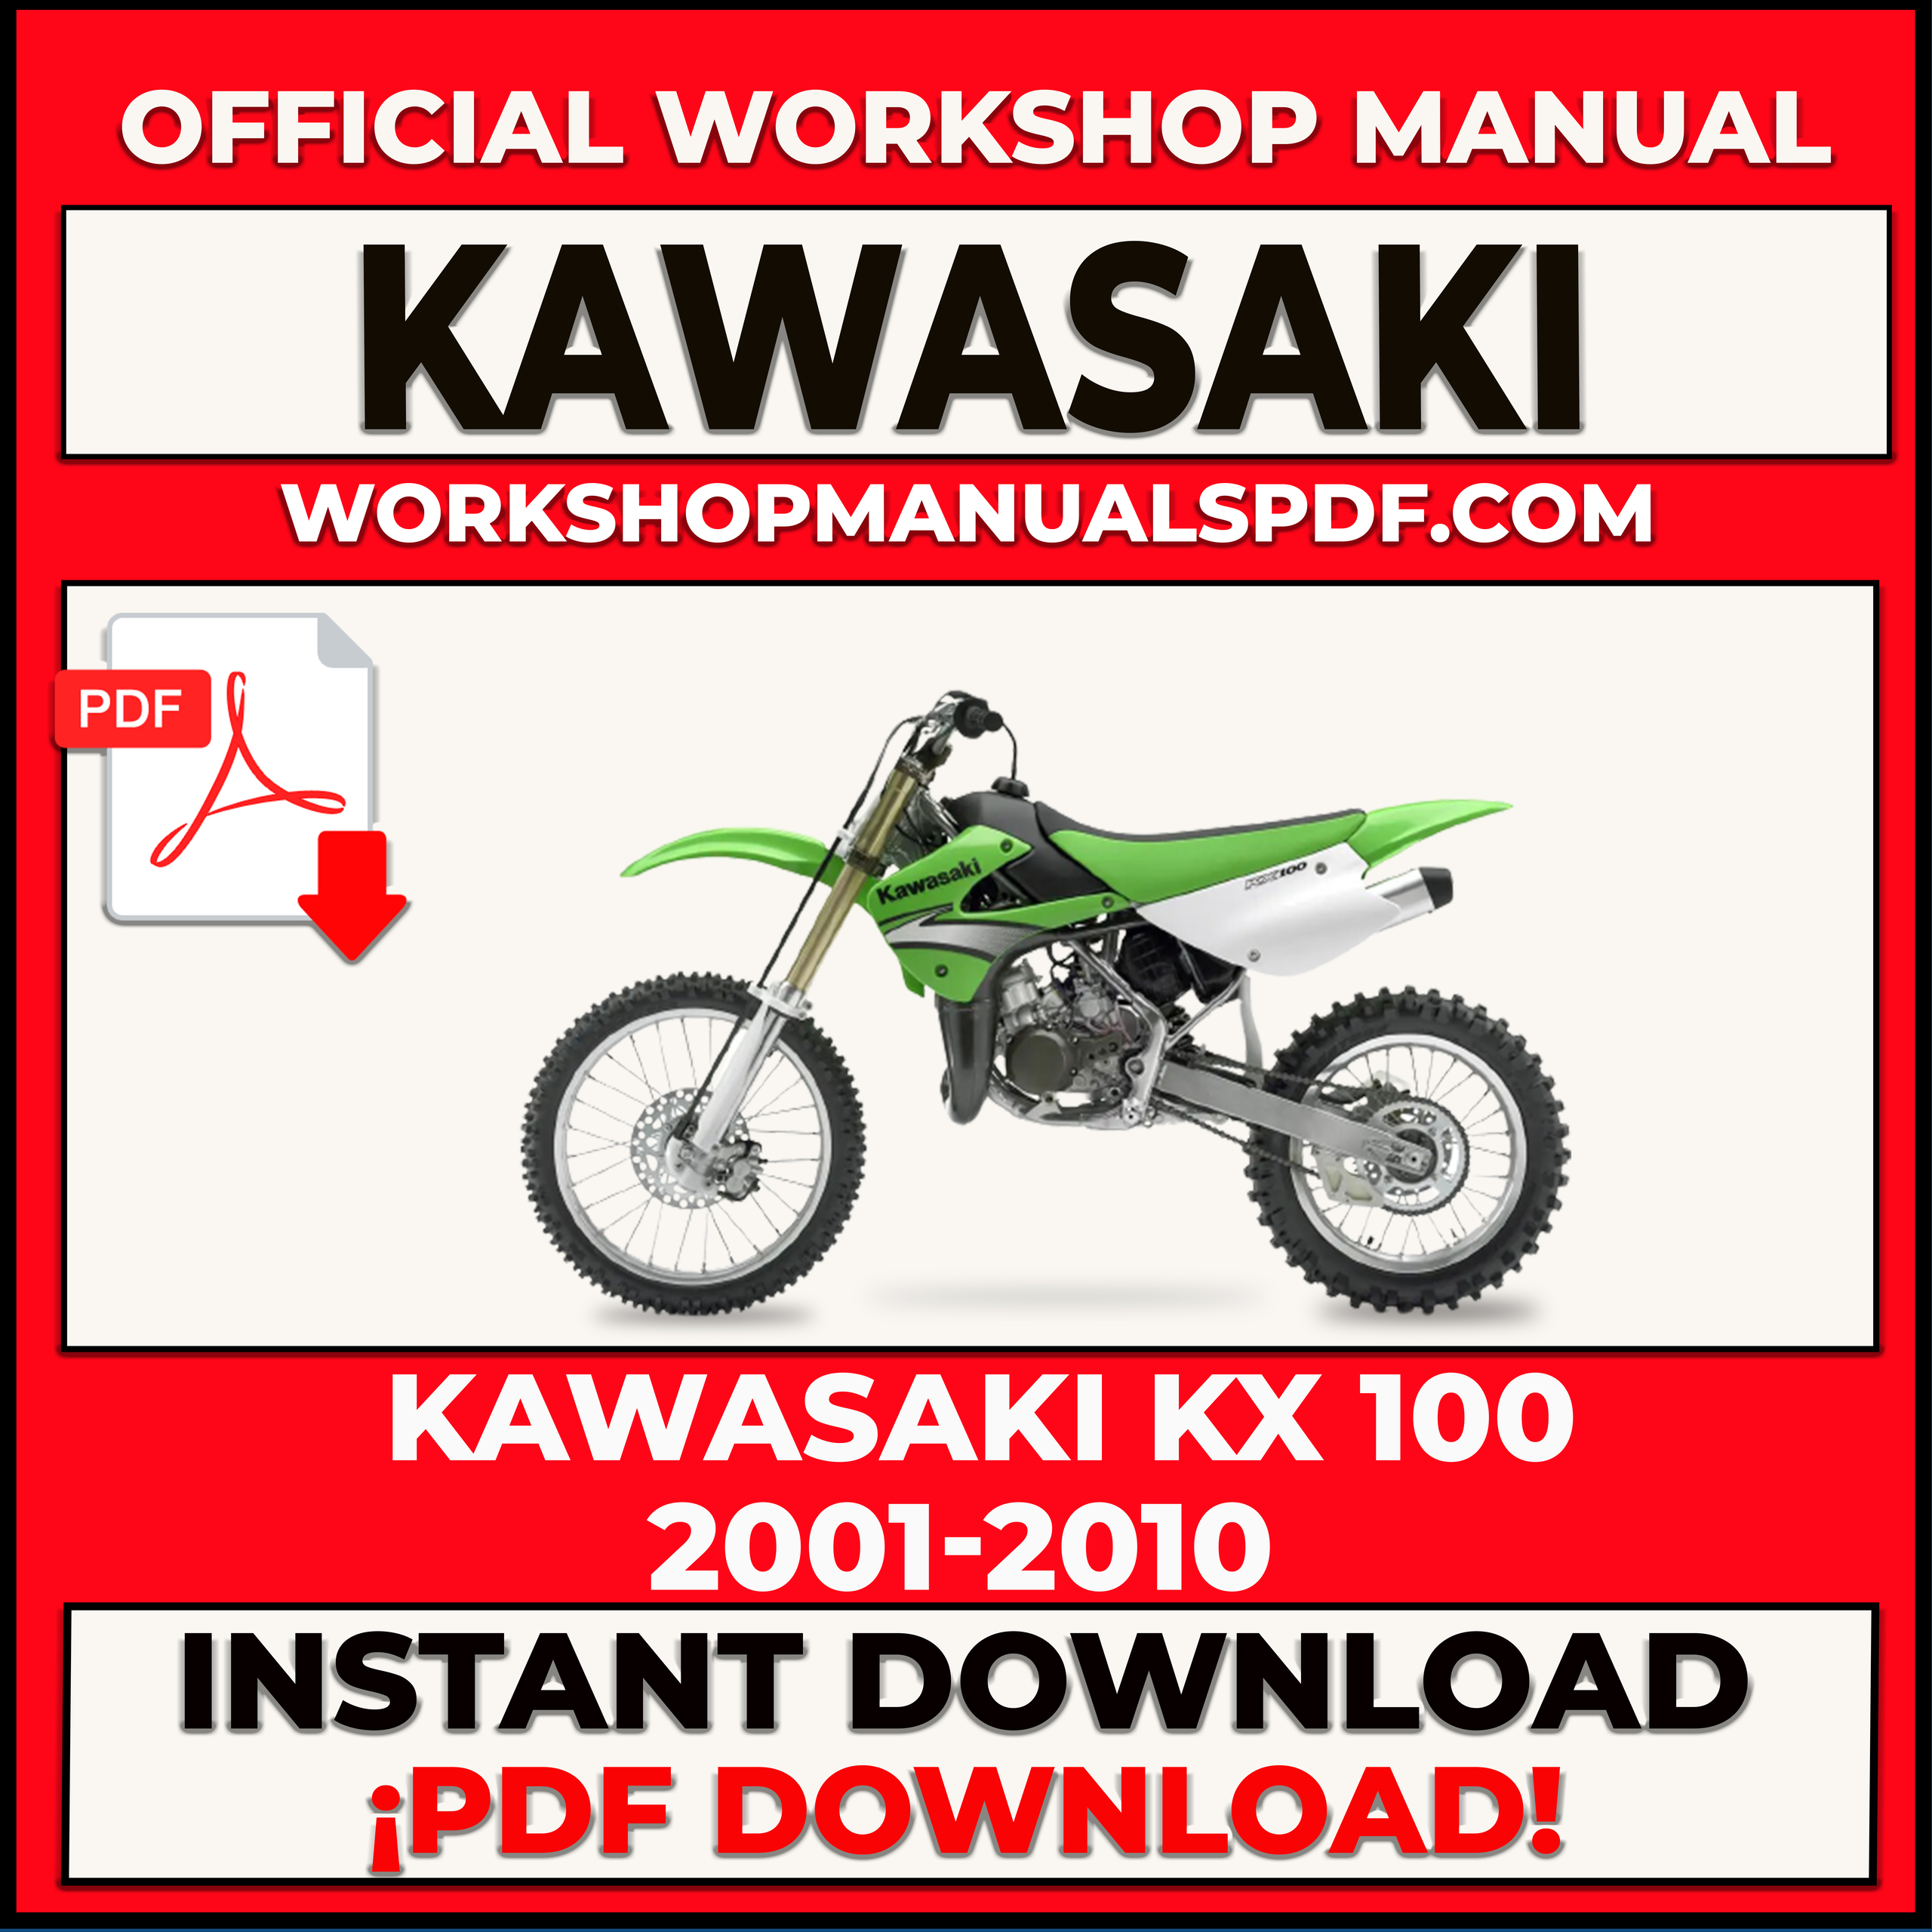 Kawasaki KX 100 2001-2010 Workshop Repair Service Manual PDF